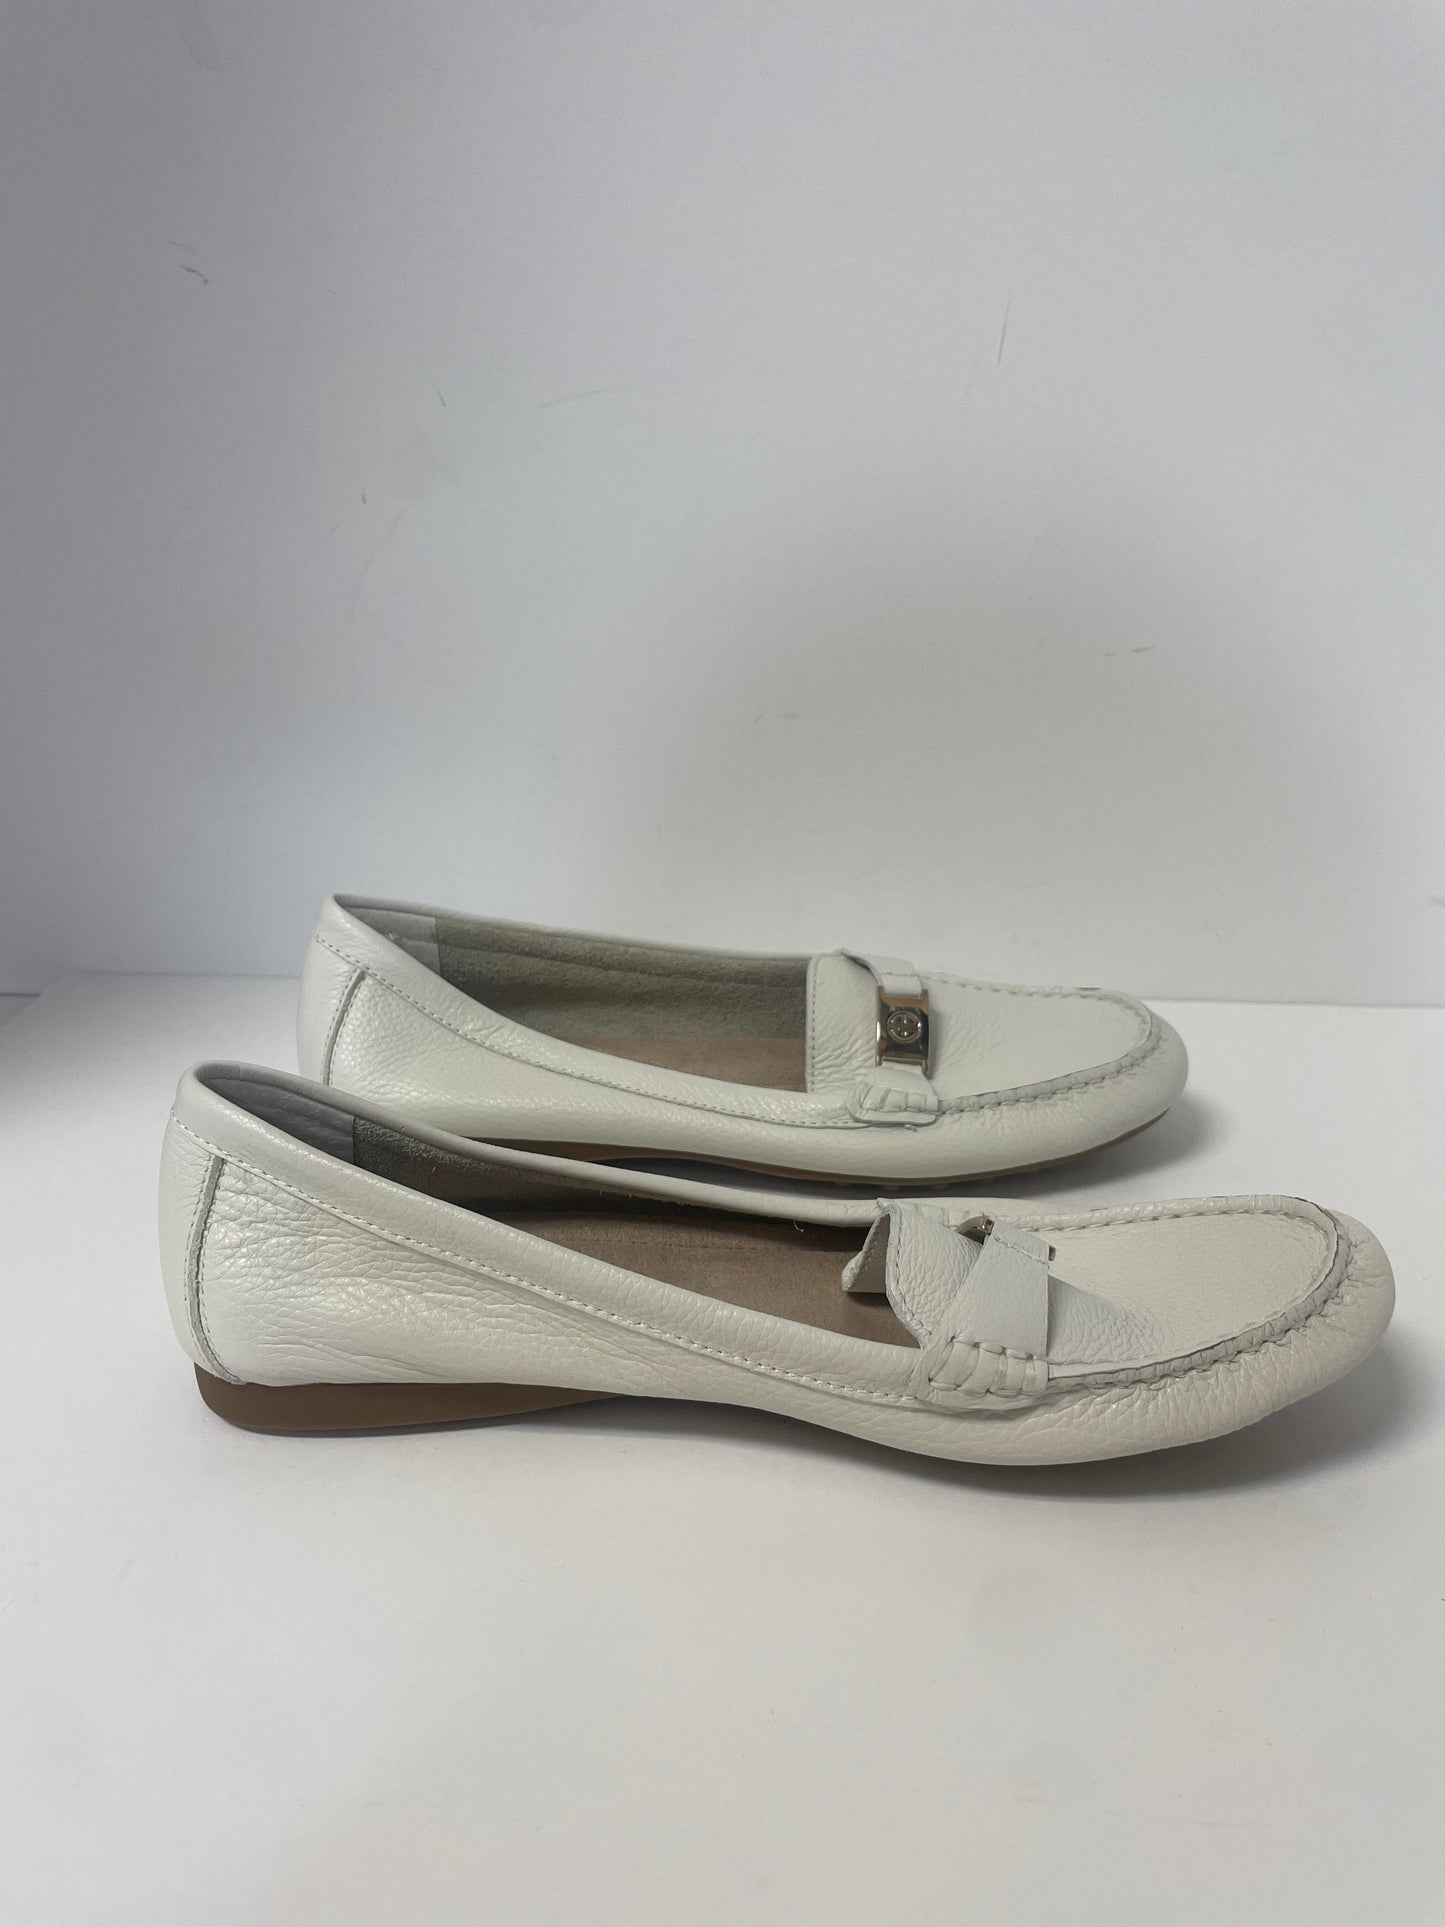 White Shoes Flats Giani Bernini, Size 10